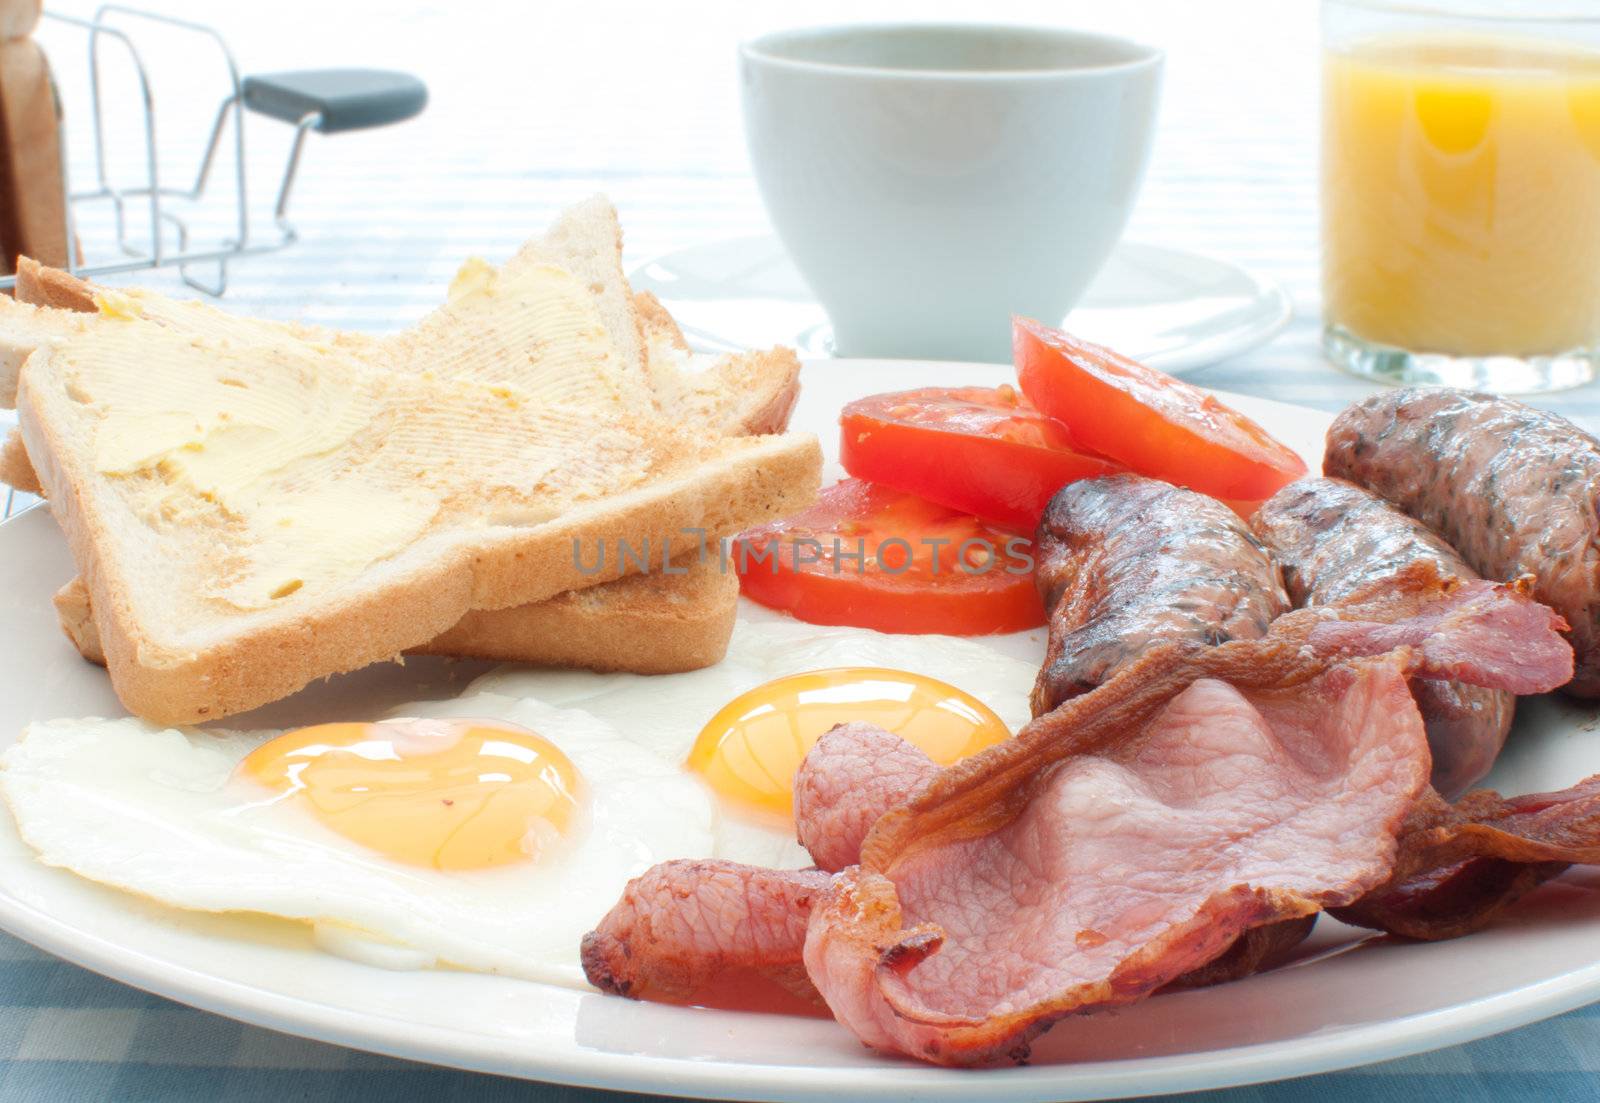 Traditional english breakfast by unikpix